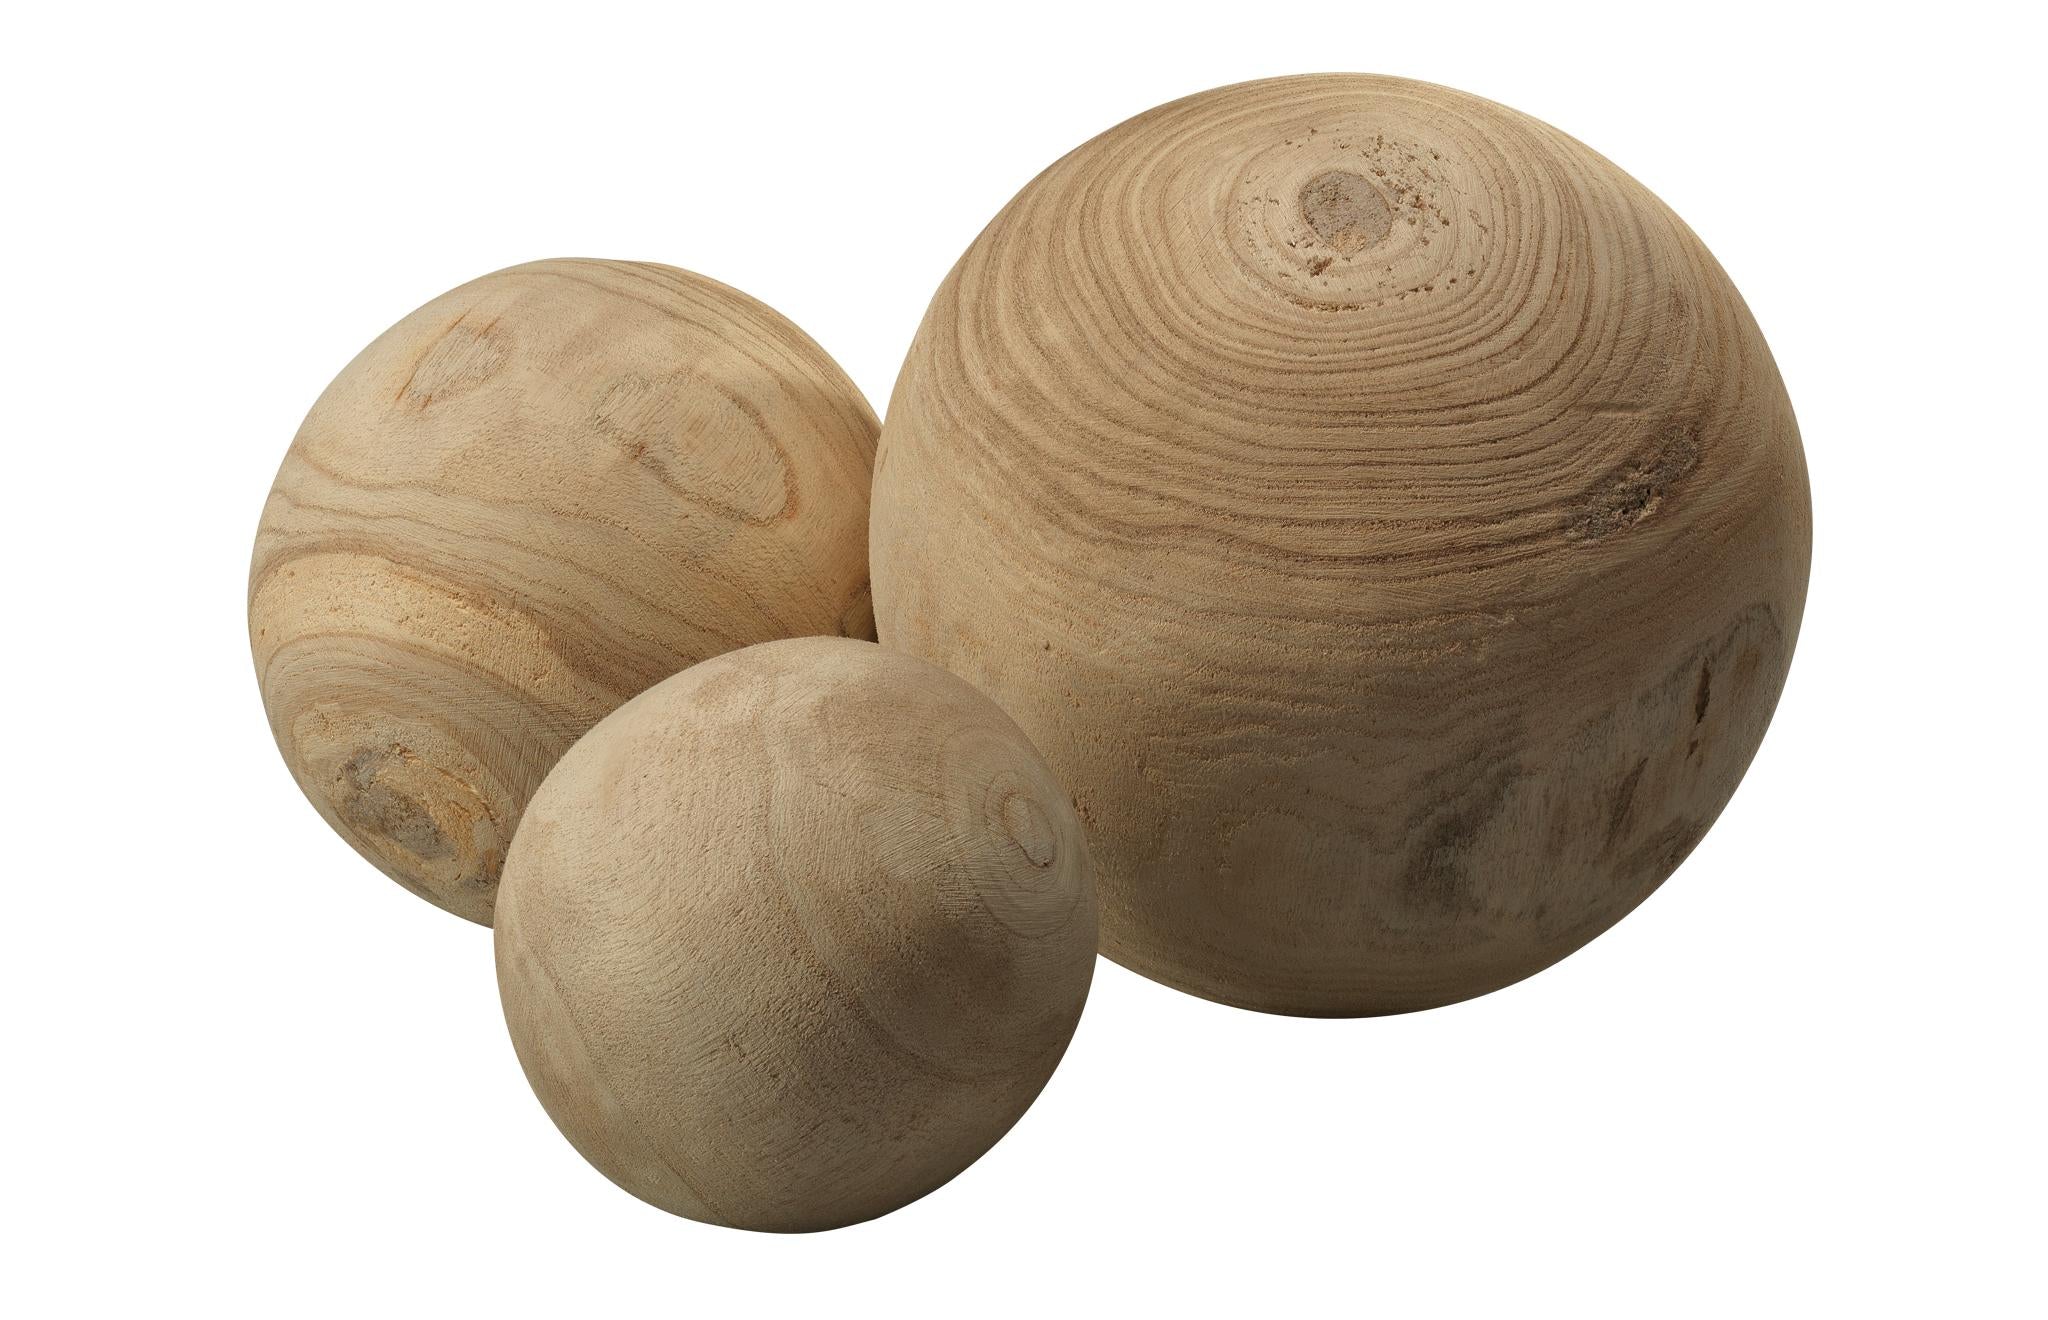 Jamie Young Natural Malibu Wood Balls (Set of 3)